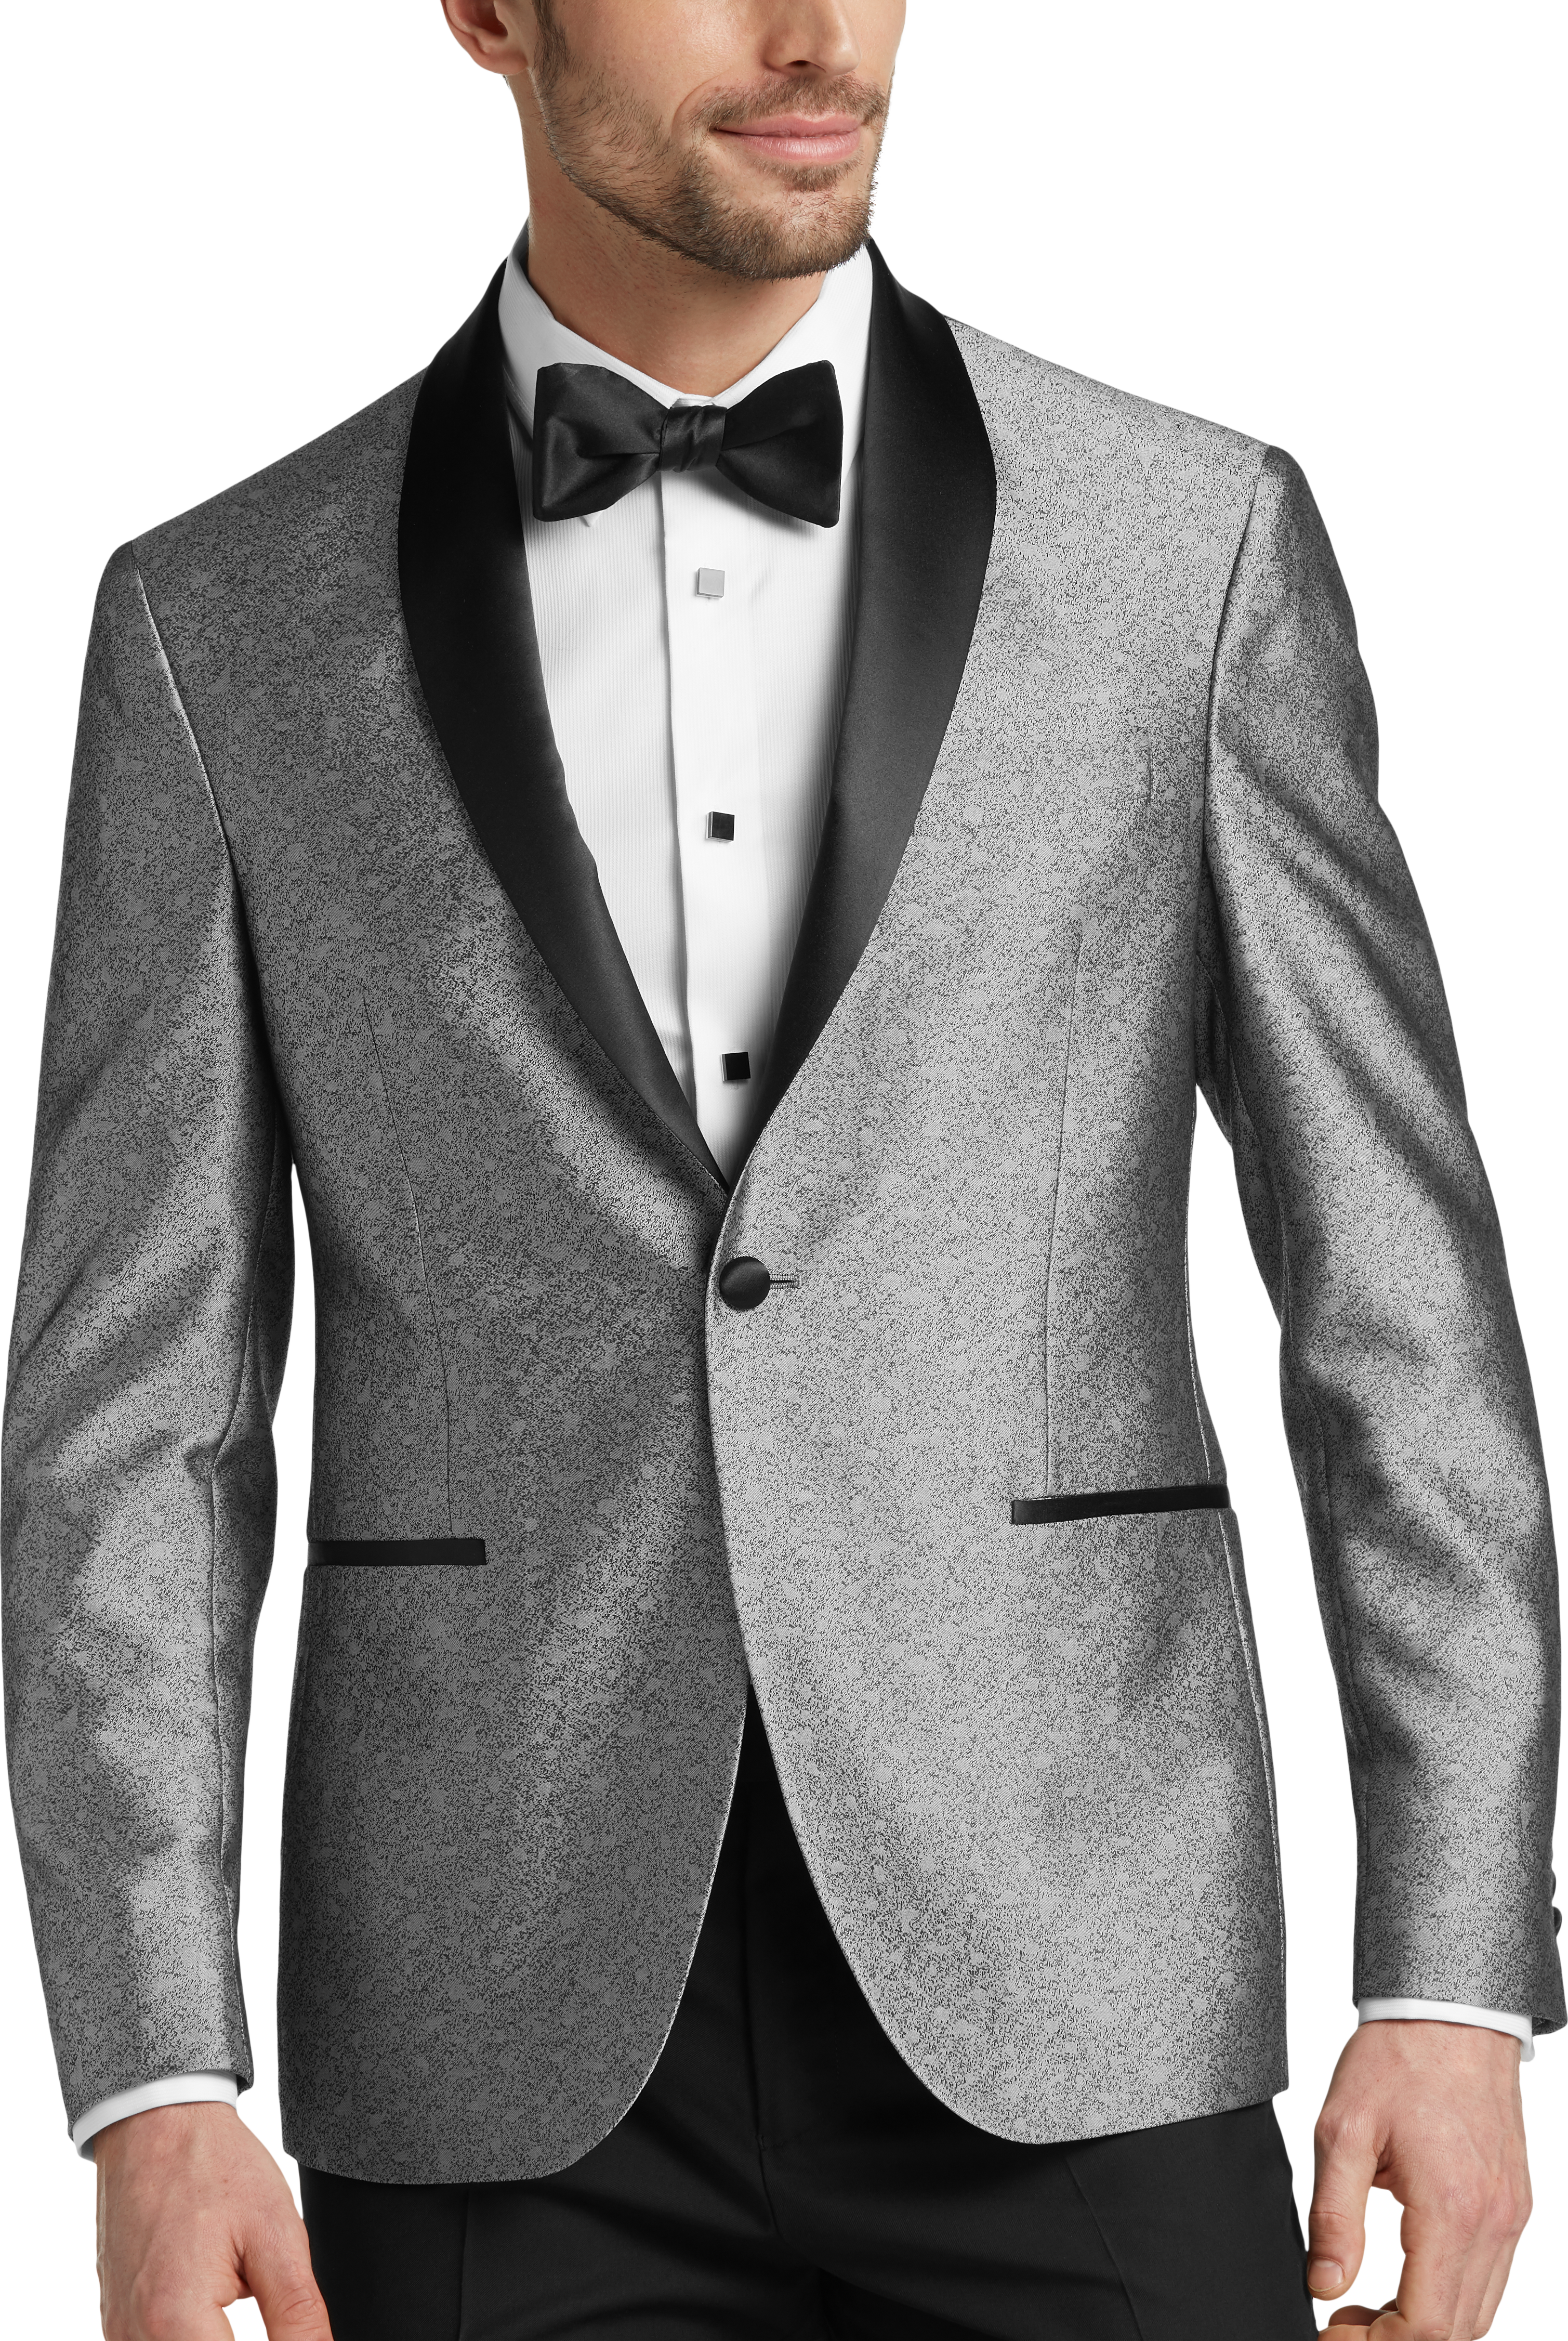 Egara Gray and Black Slim Fit Dinner Jacket - Men's Featured | Men's ...